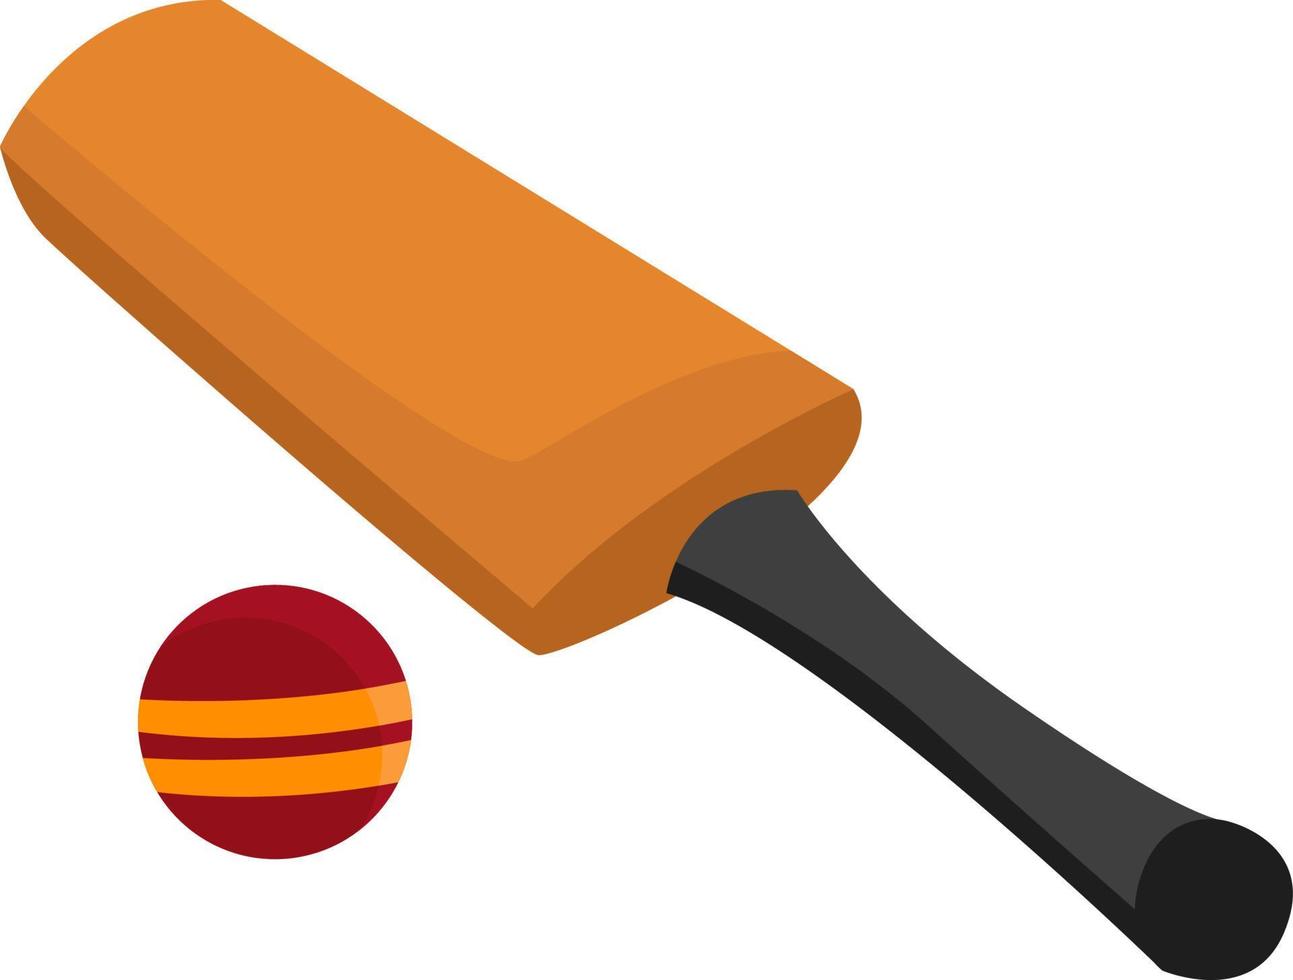 Cricket con pelota, ilustración, vector sobre fondo blanco